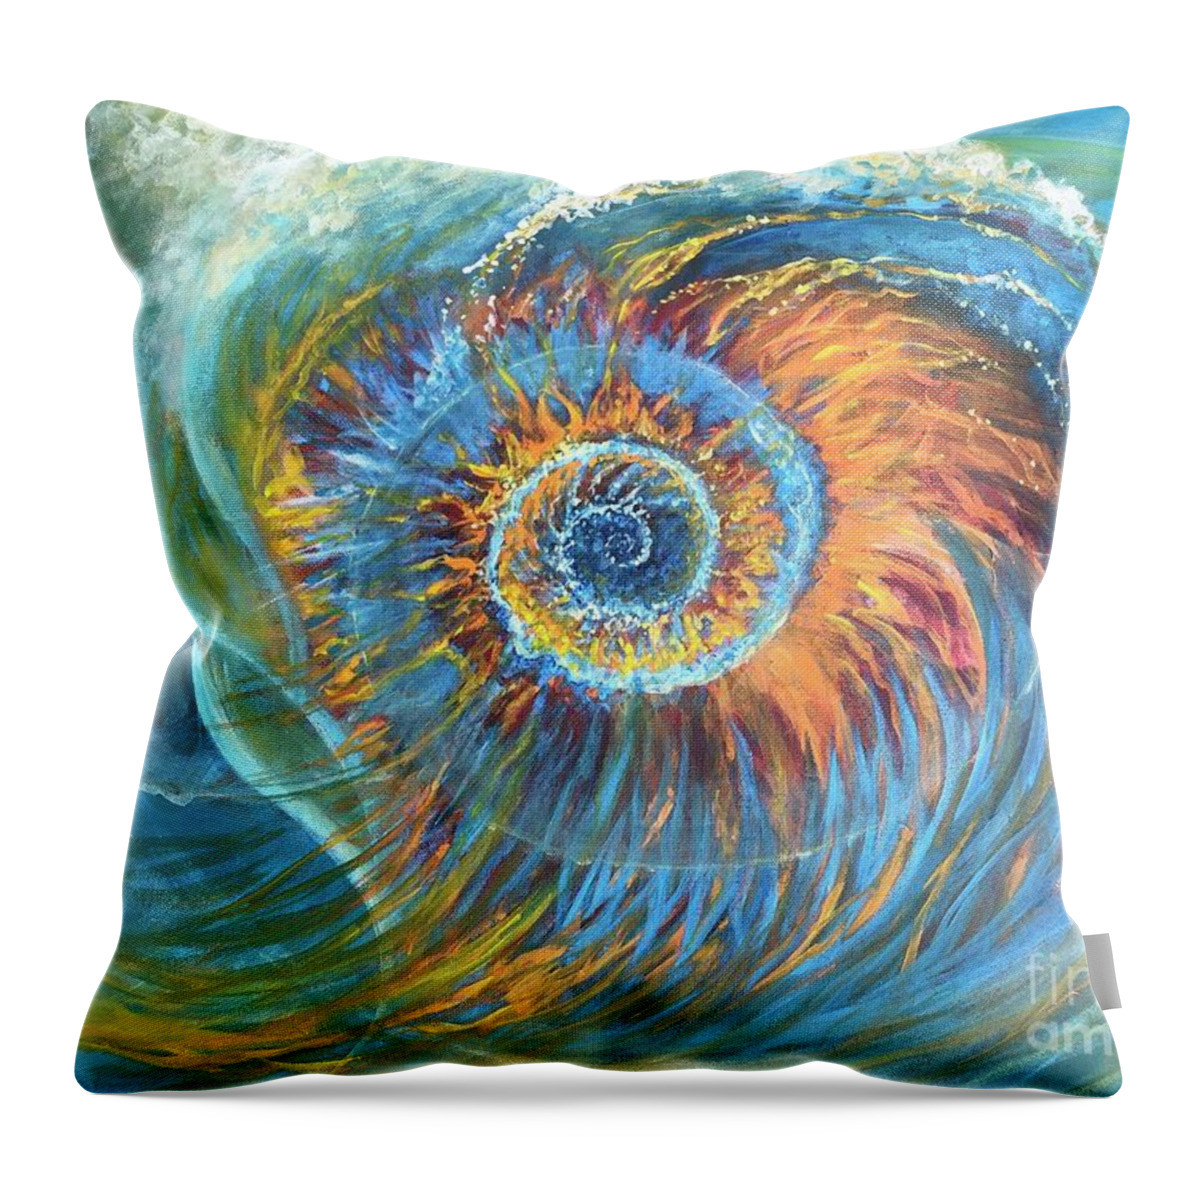 Spiral Throw Pillow featuring the painting Nautilus by Kristine Izak